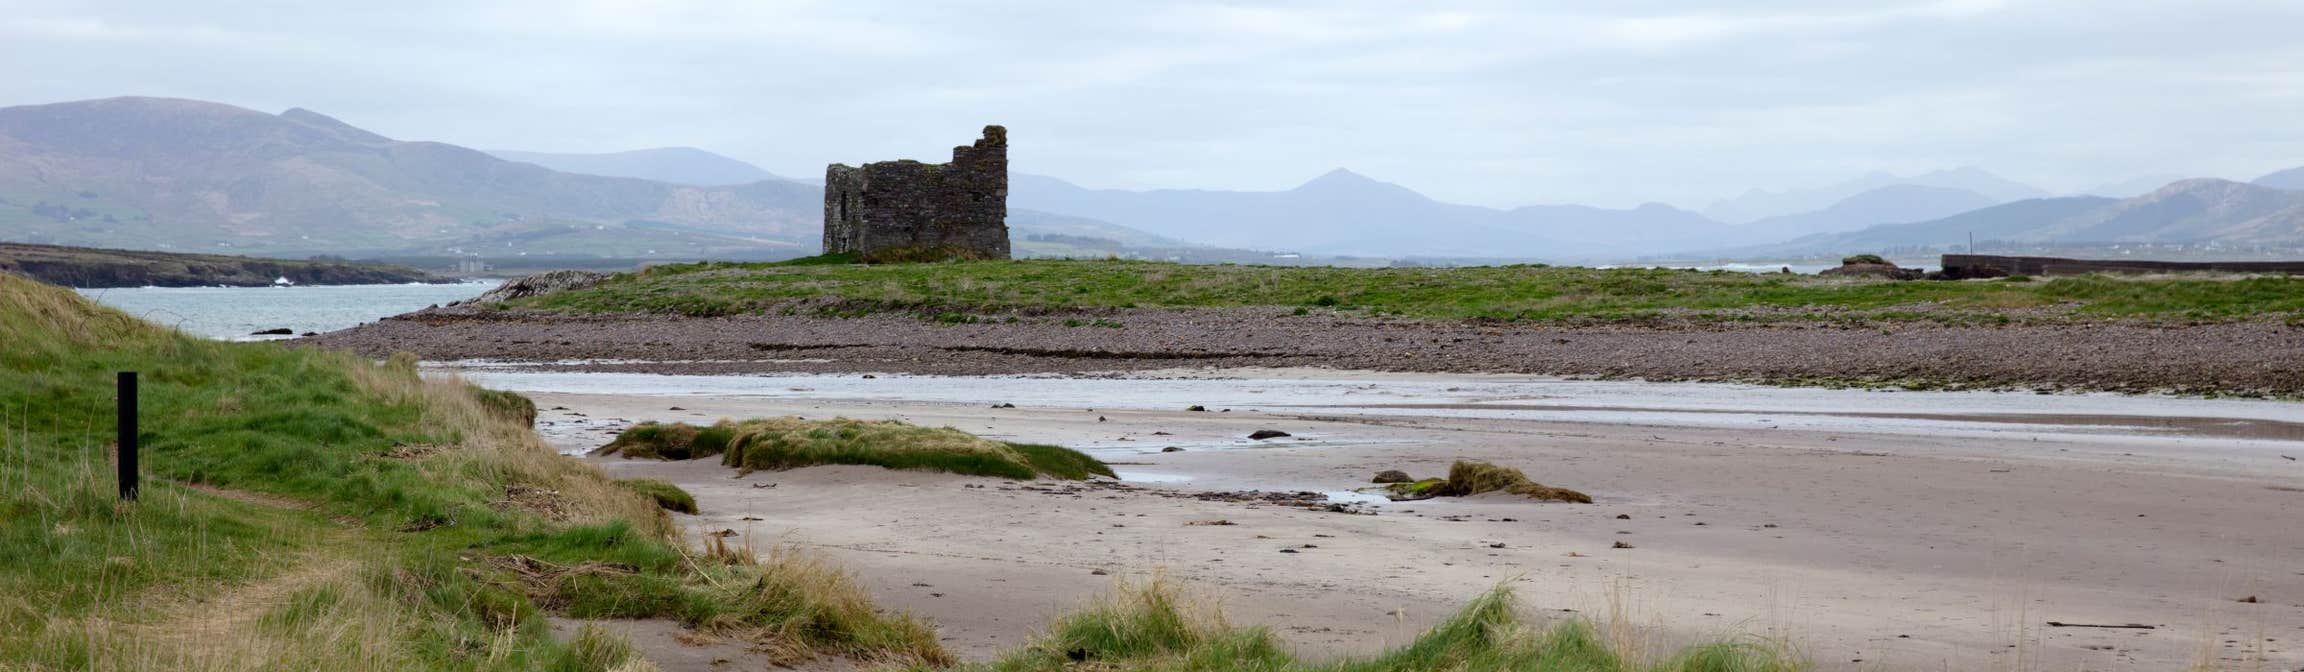 Image of Ballinskelligs Castle in County Kerry